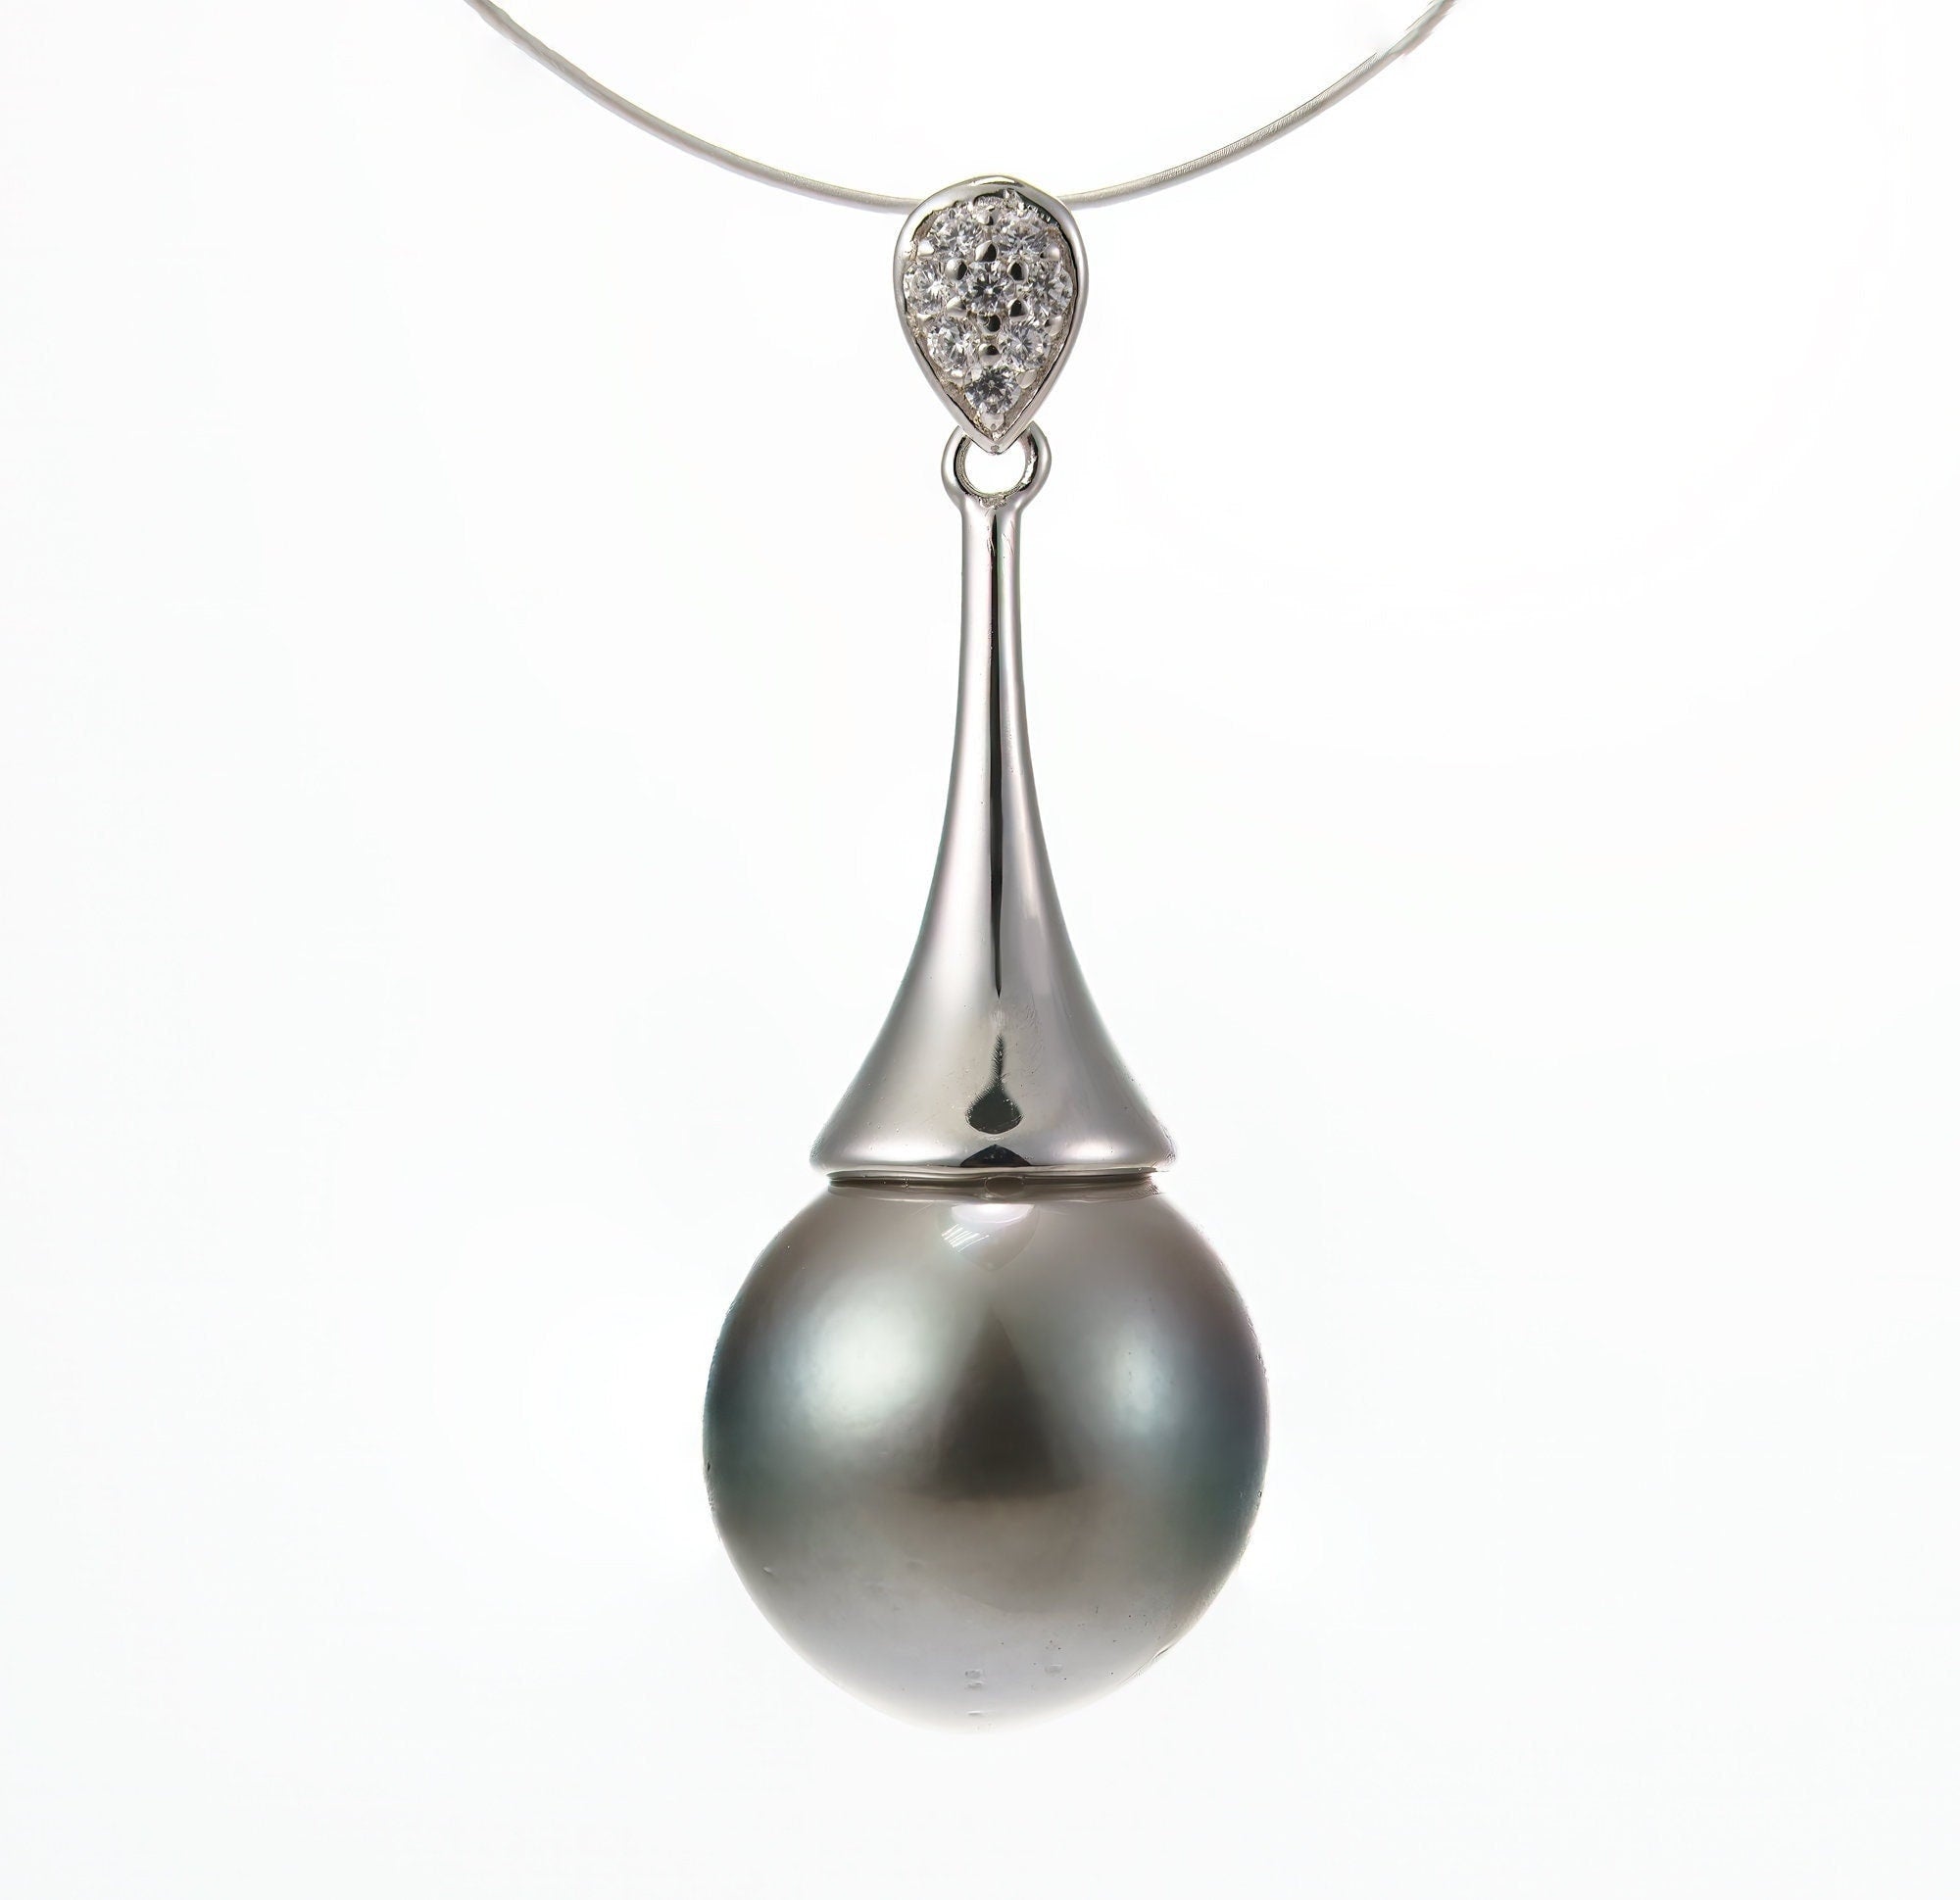 11mm tahitian pearl pendant, 925 sterling silver, rhodium finish, cubic zirconia